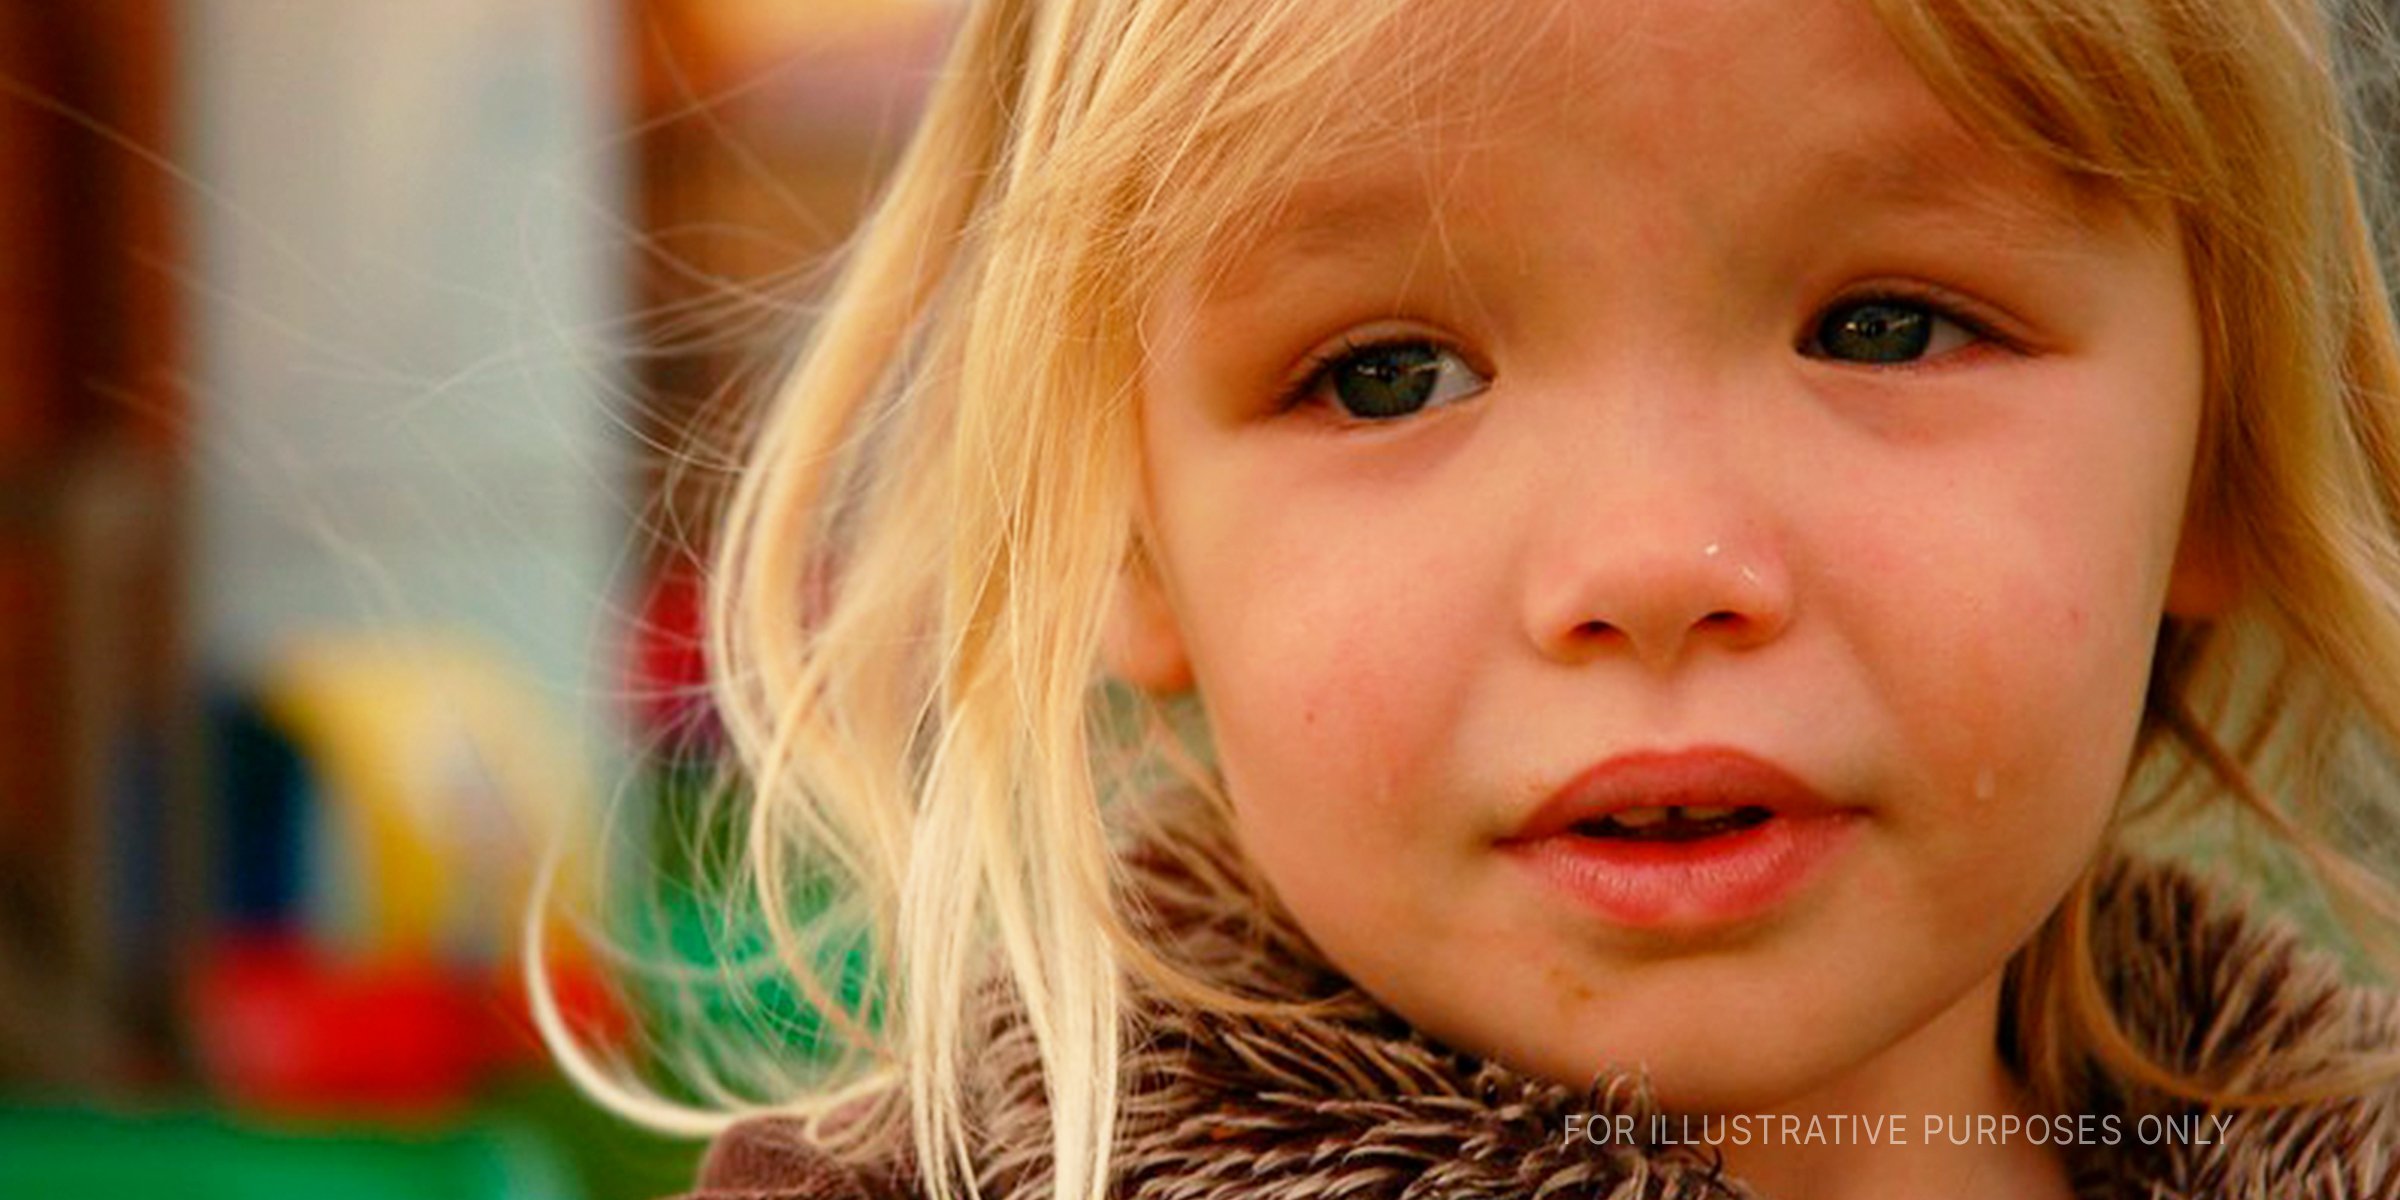 Little girl | Source: Flickr / gemsling (CC BY 2.0)